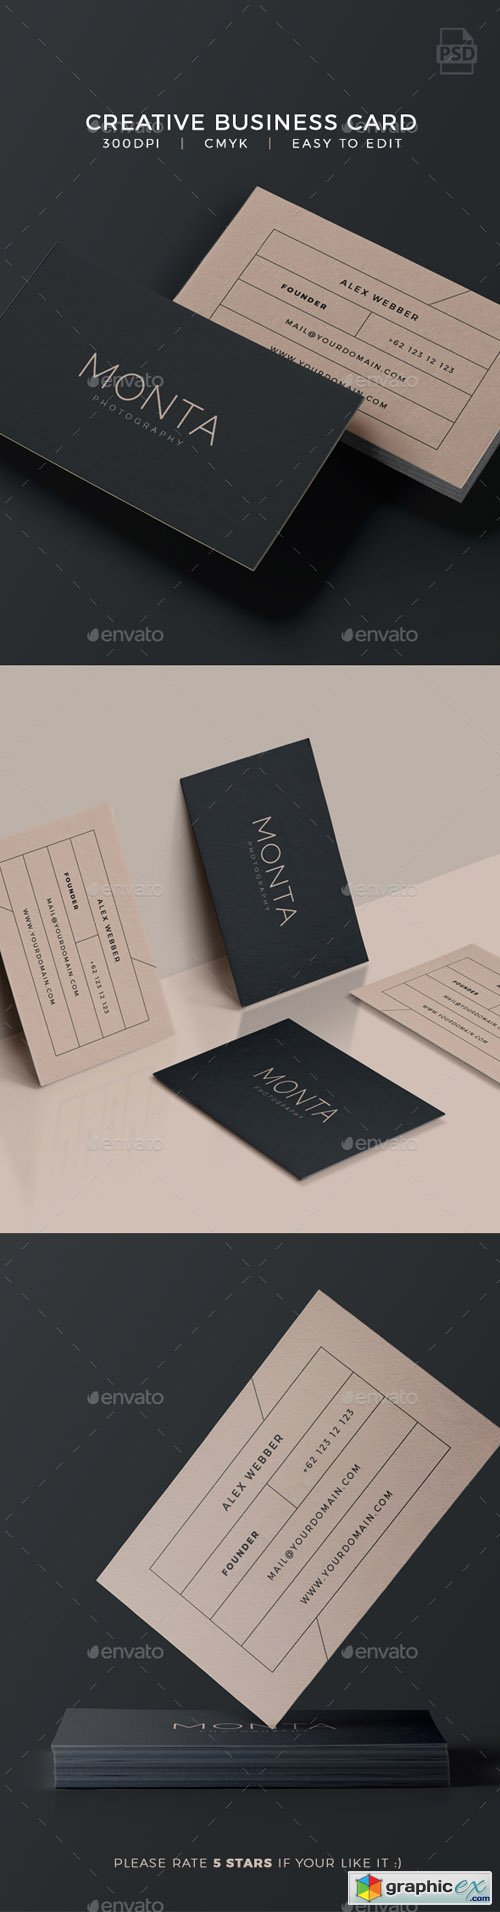 Creative Business Card - Monta